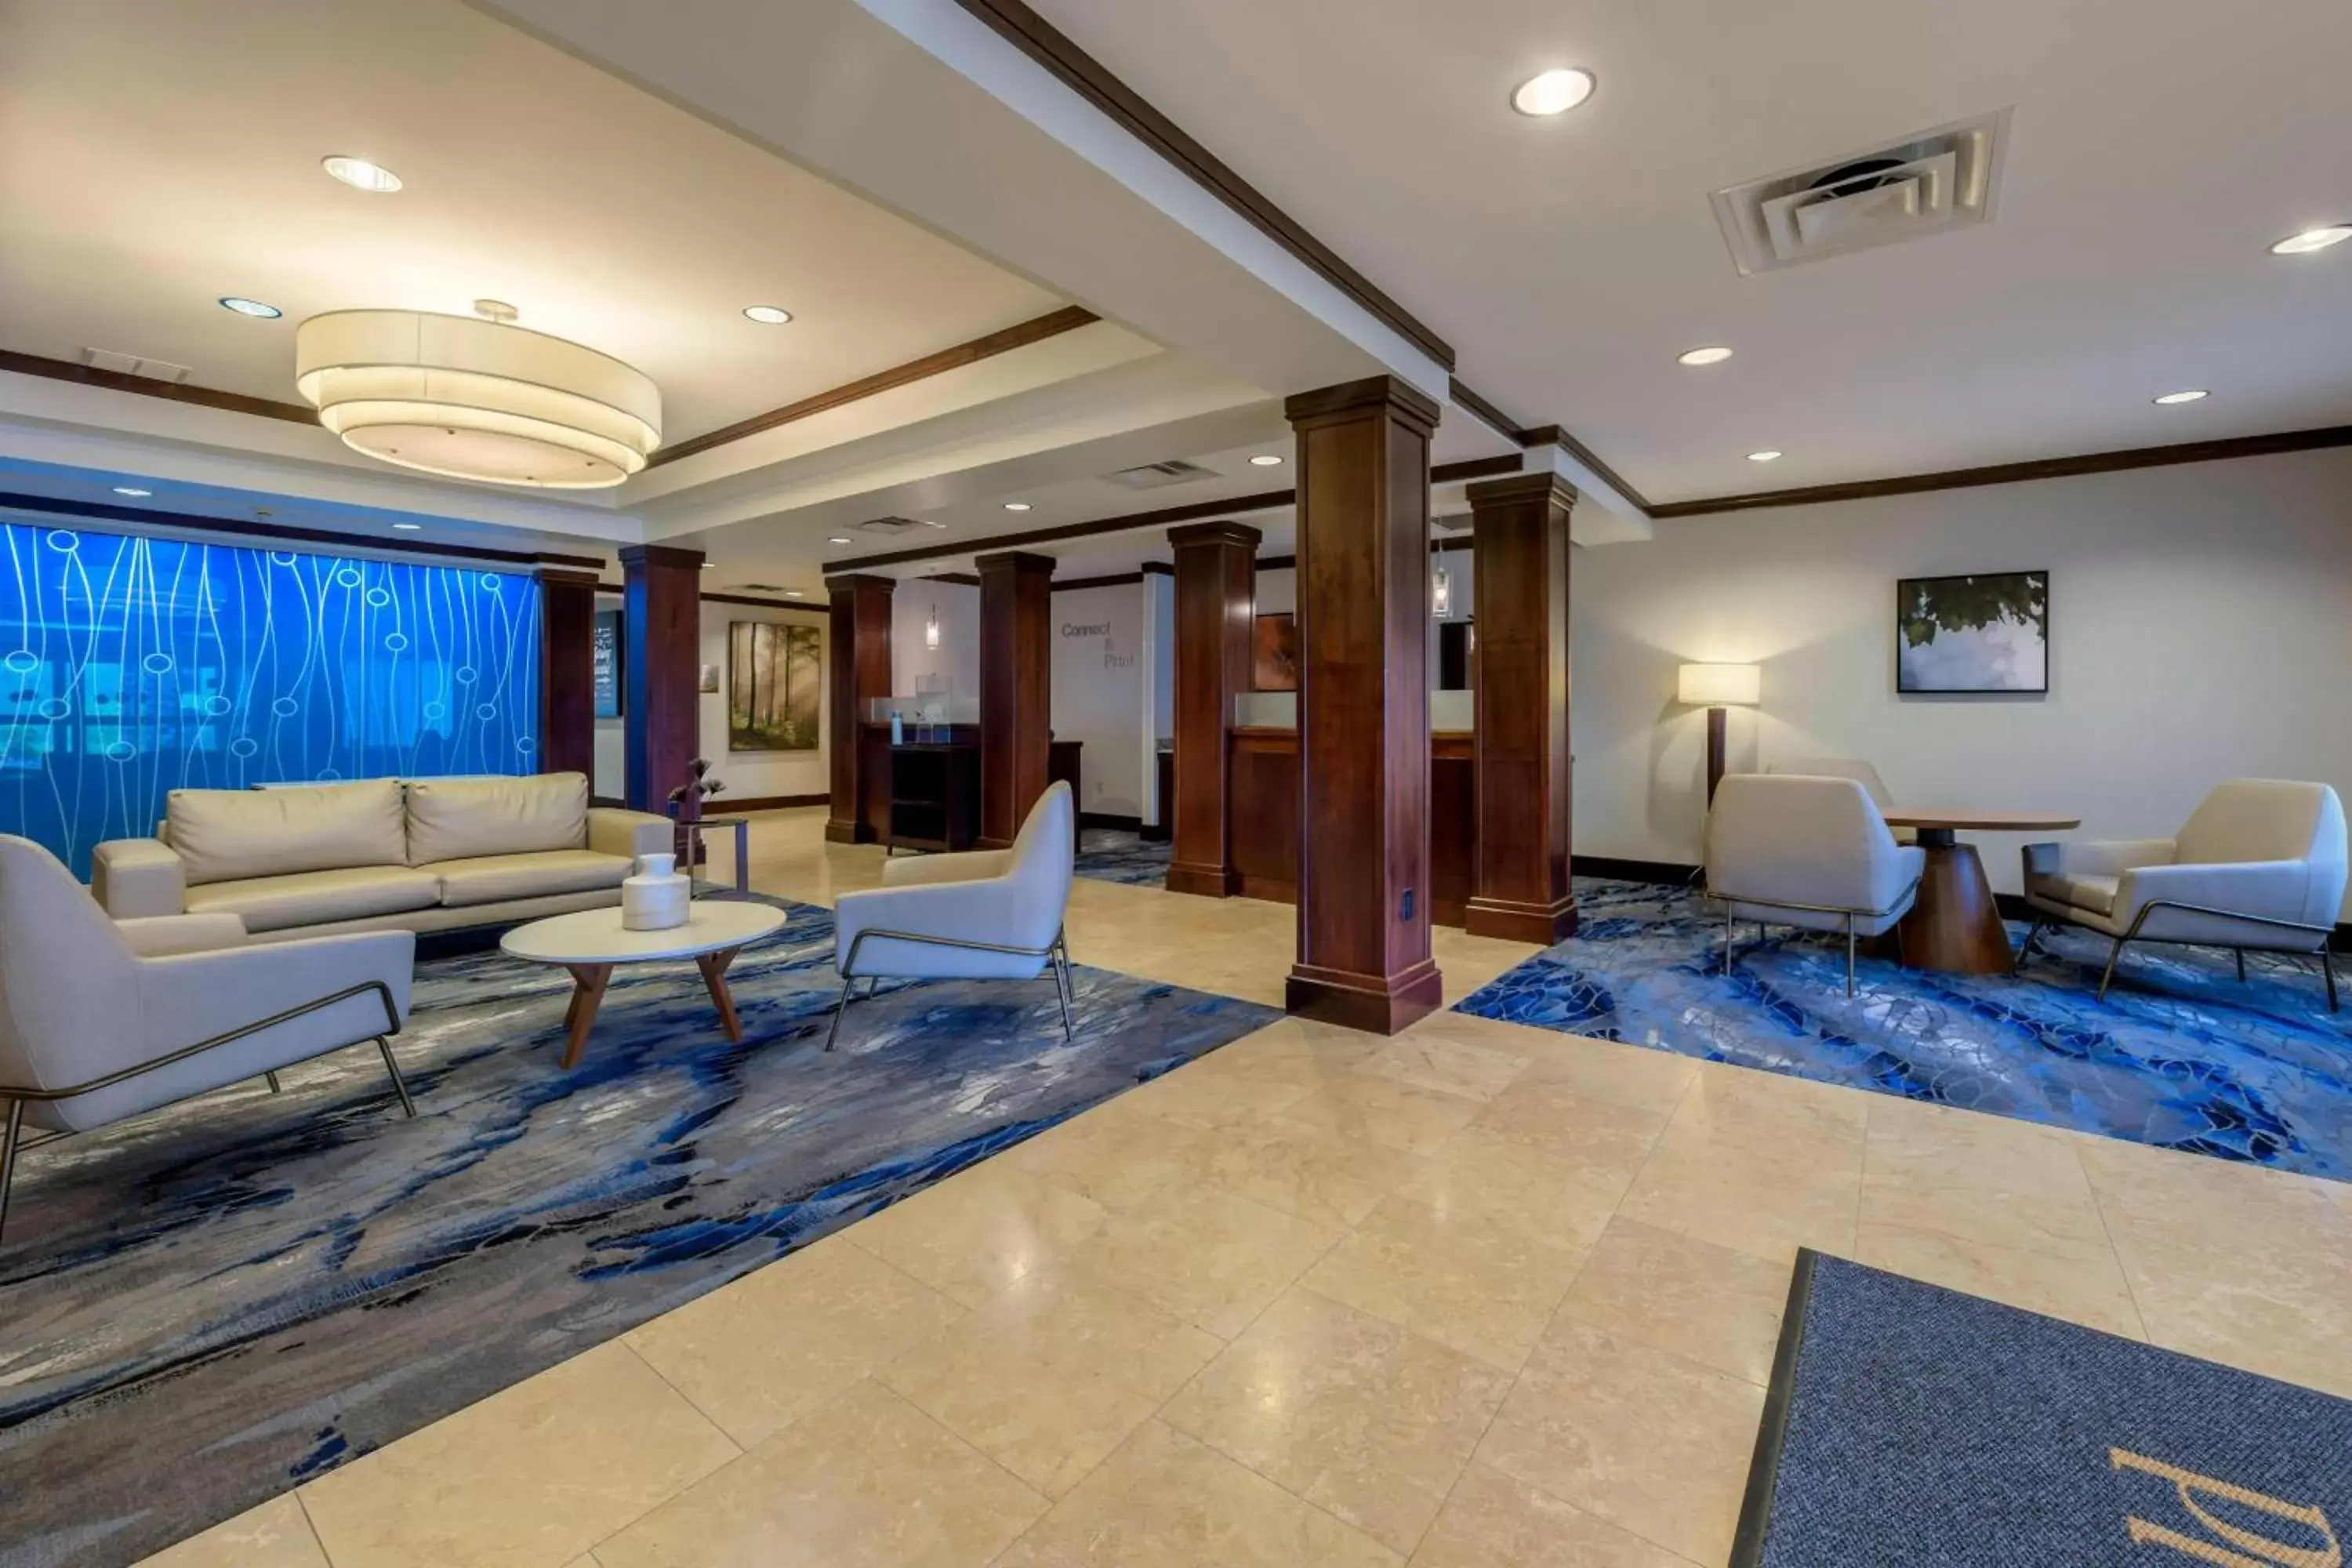 Lobby or reception in Fairfield Inn & Suites by Marriott Slippery Rock